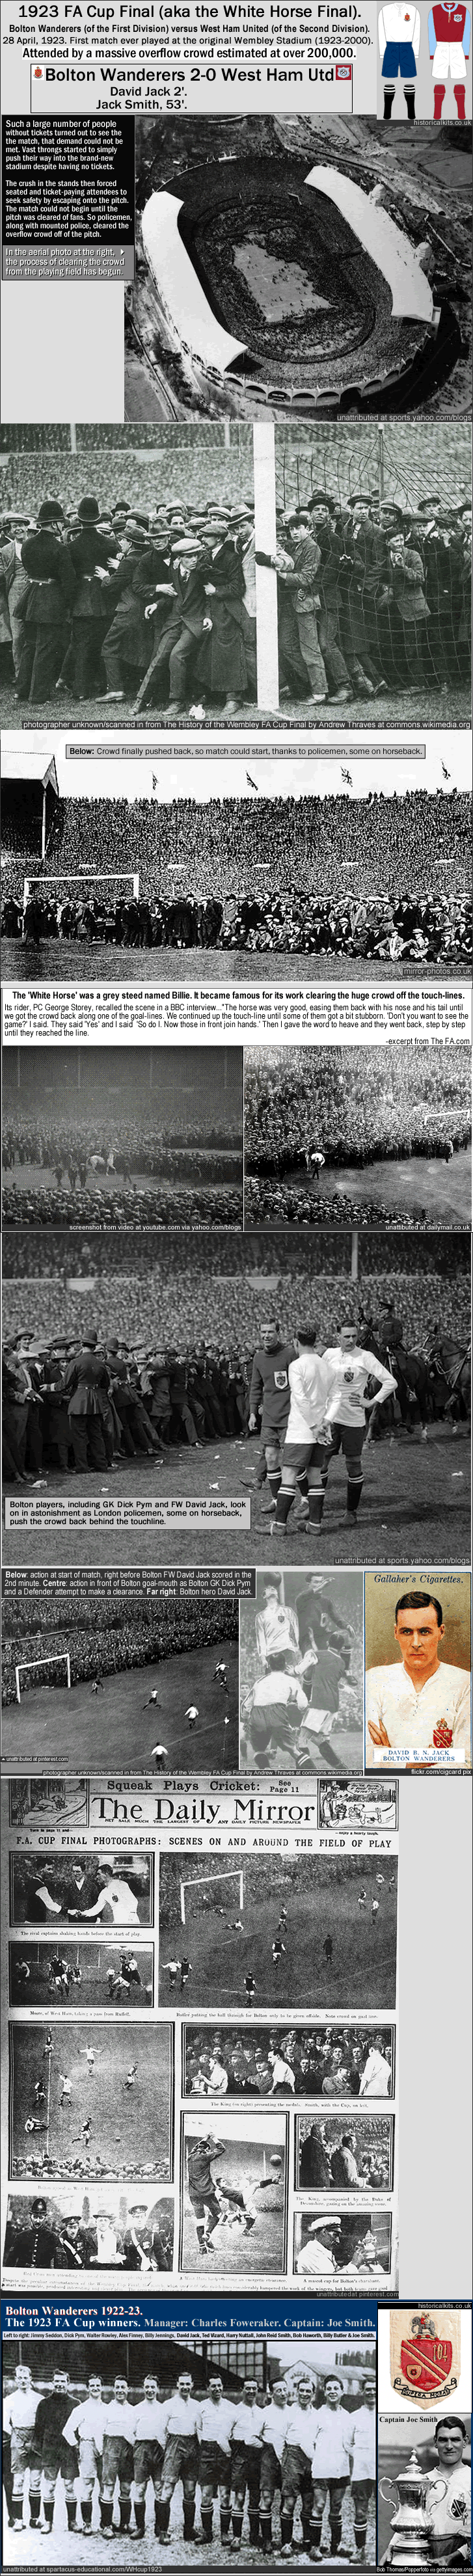 1923_fa-cup_final_bolton_2-0_west-ham_white-horse-final_200-k-crowd_old-wembley_david-jack_capt-joe-smith_e_.gif